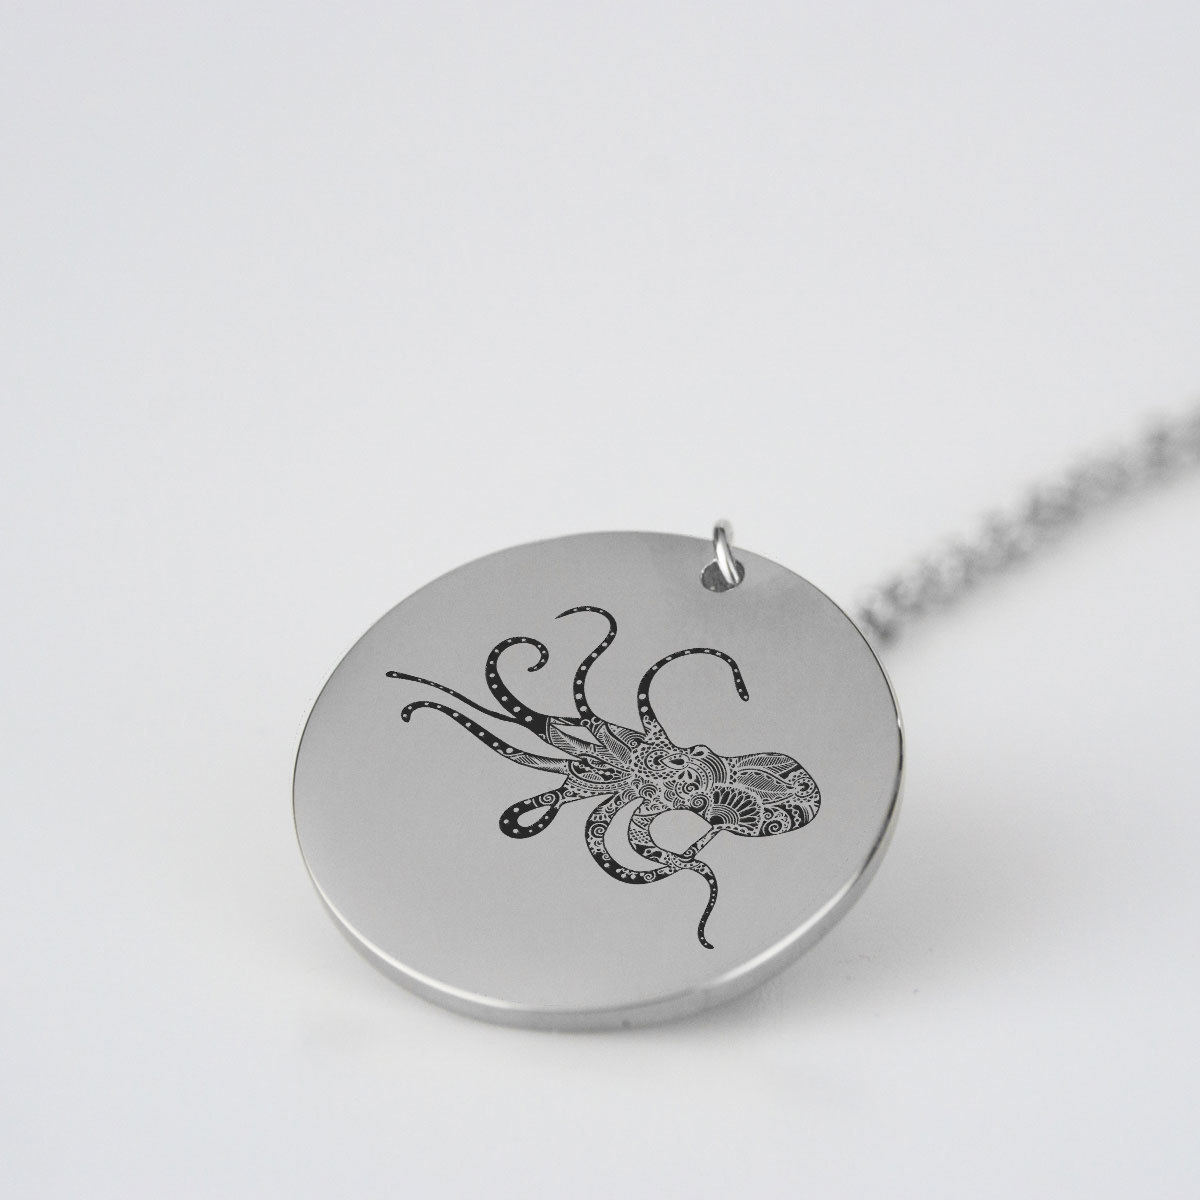 Octopus Ocean Charm Necklace